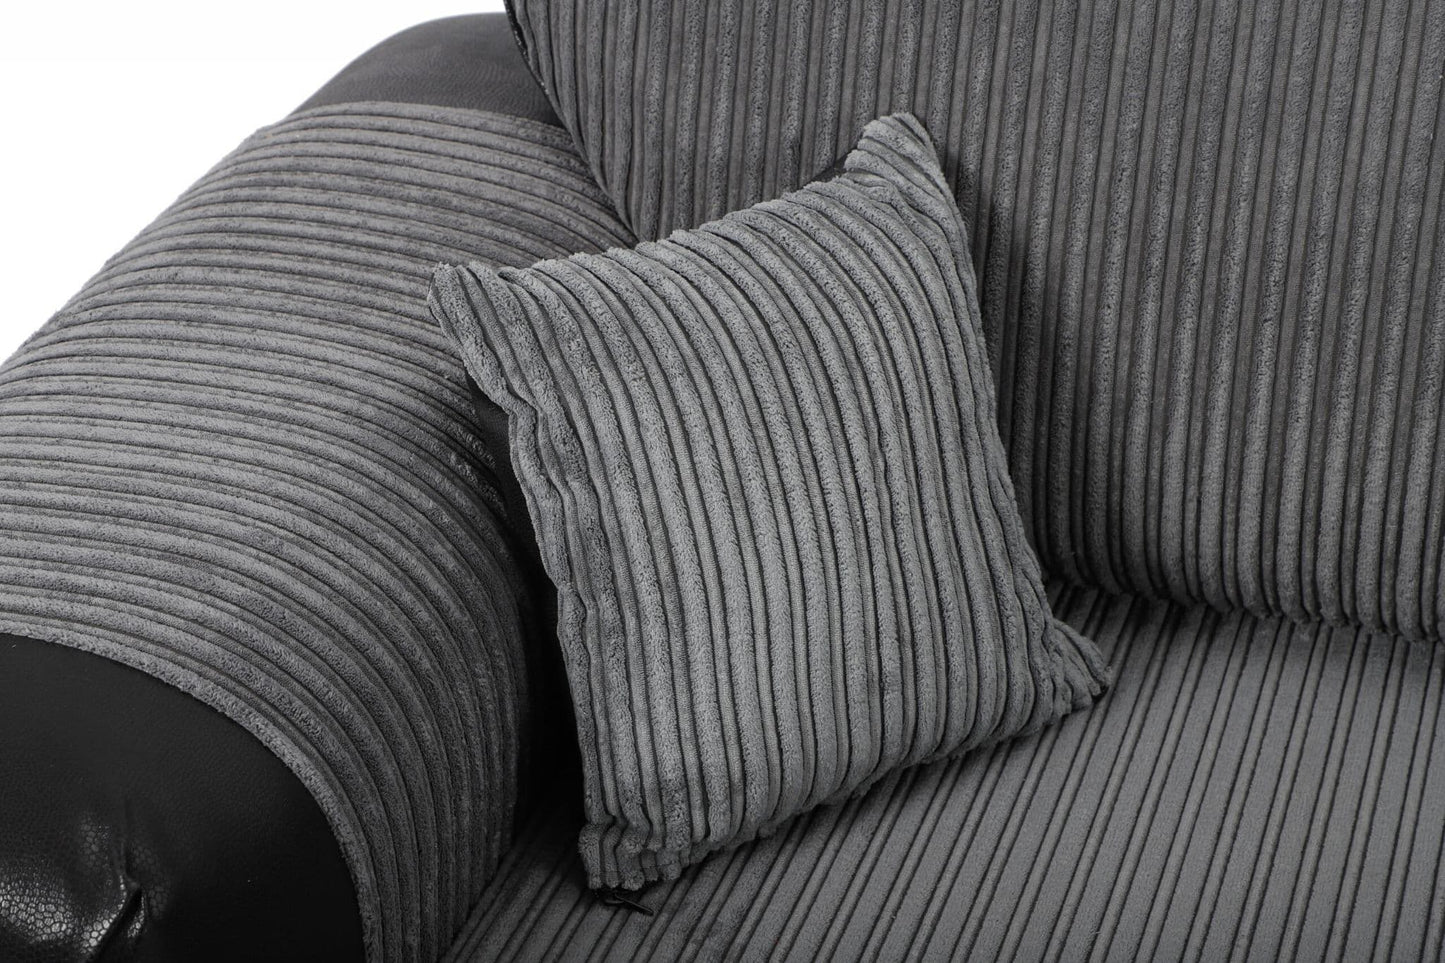 Sector Large Corner Sofa Black/Grey Cord